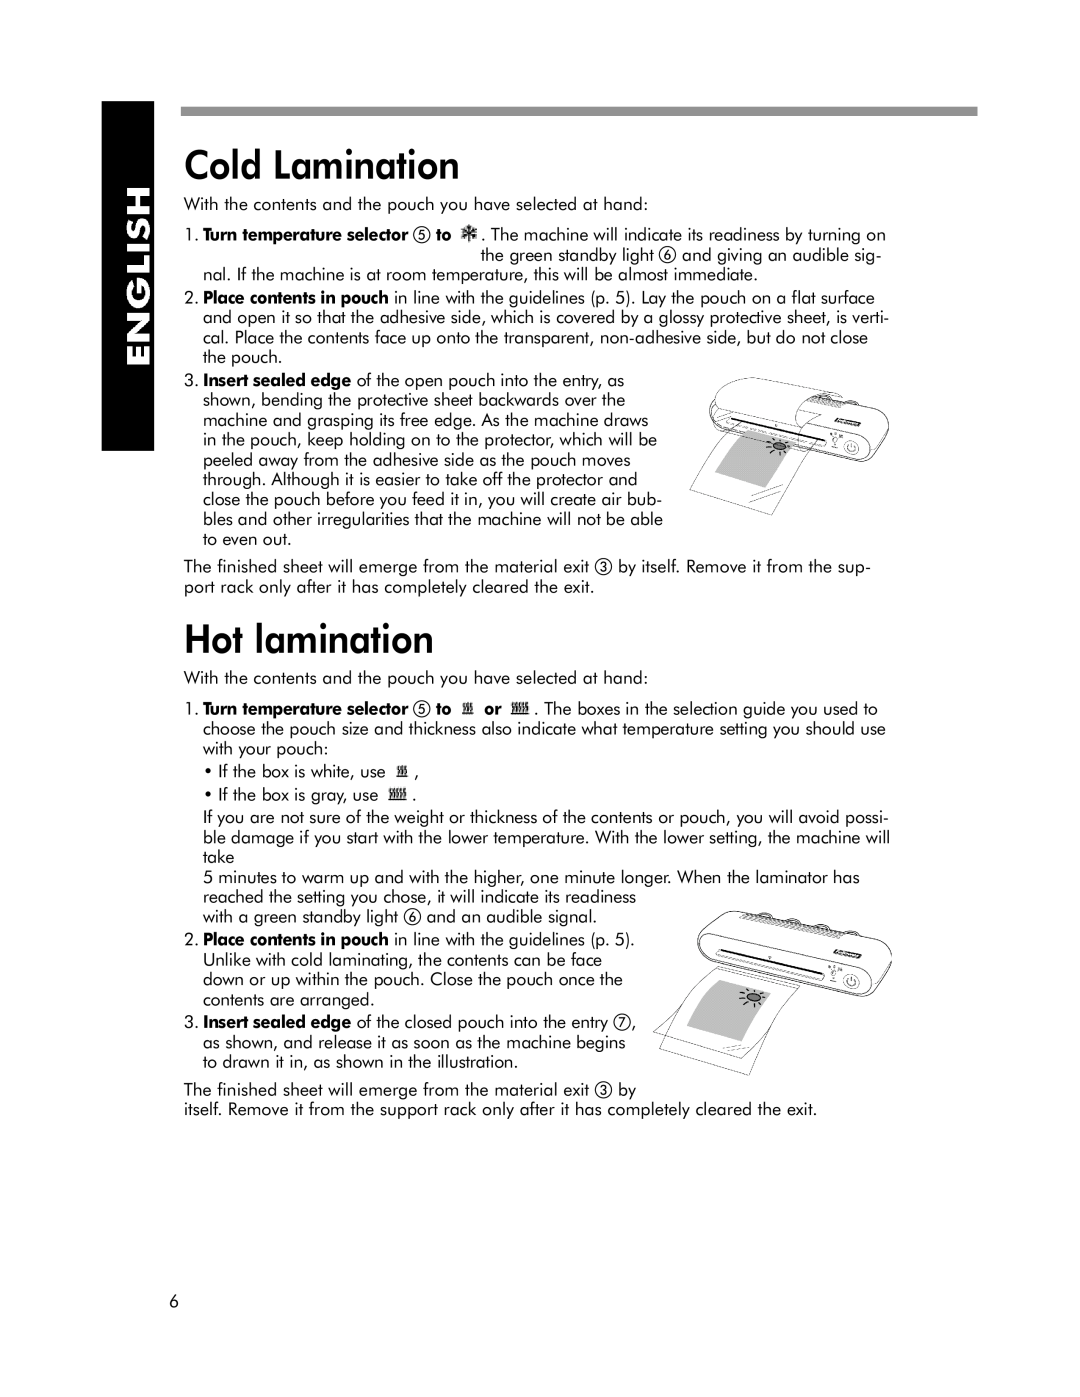 Fellowes EXL 125-2, EXL 45-2, EXL 95-2 manual Cold Lamination, Hot lamination 